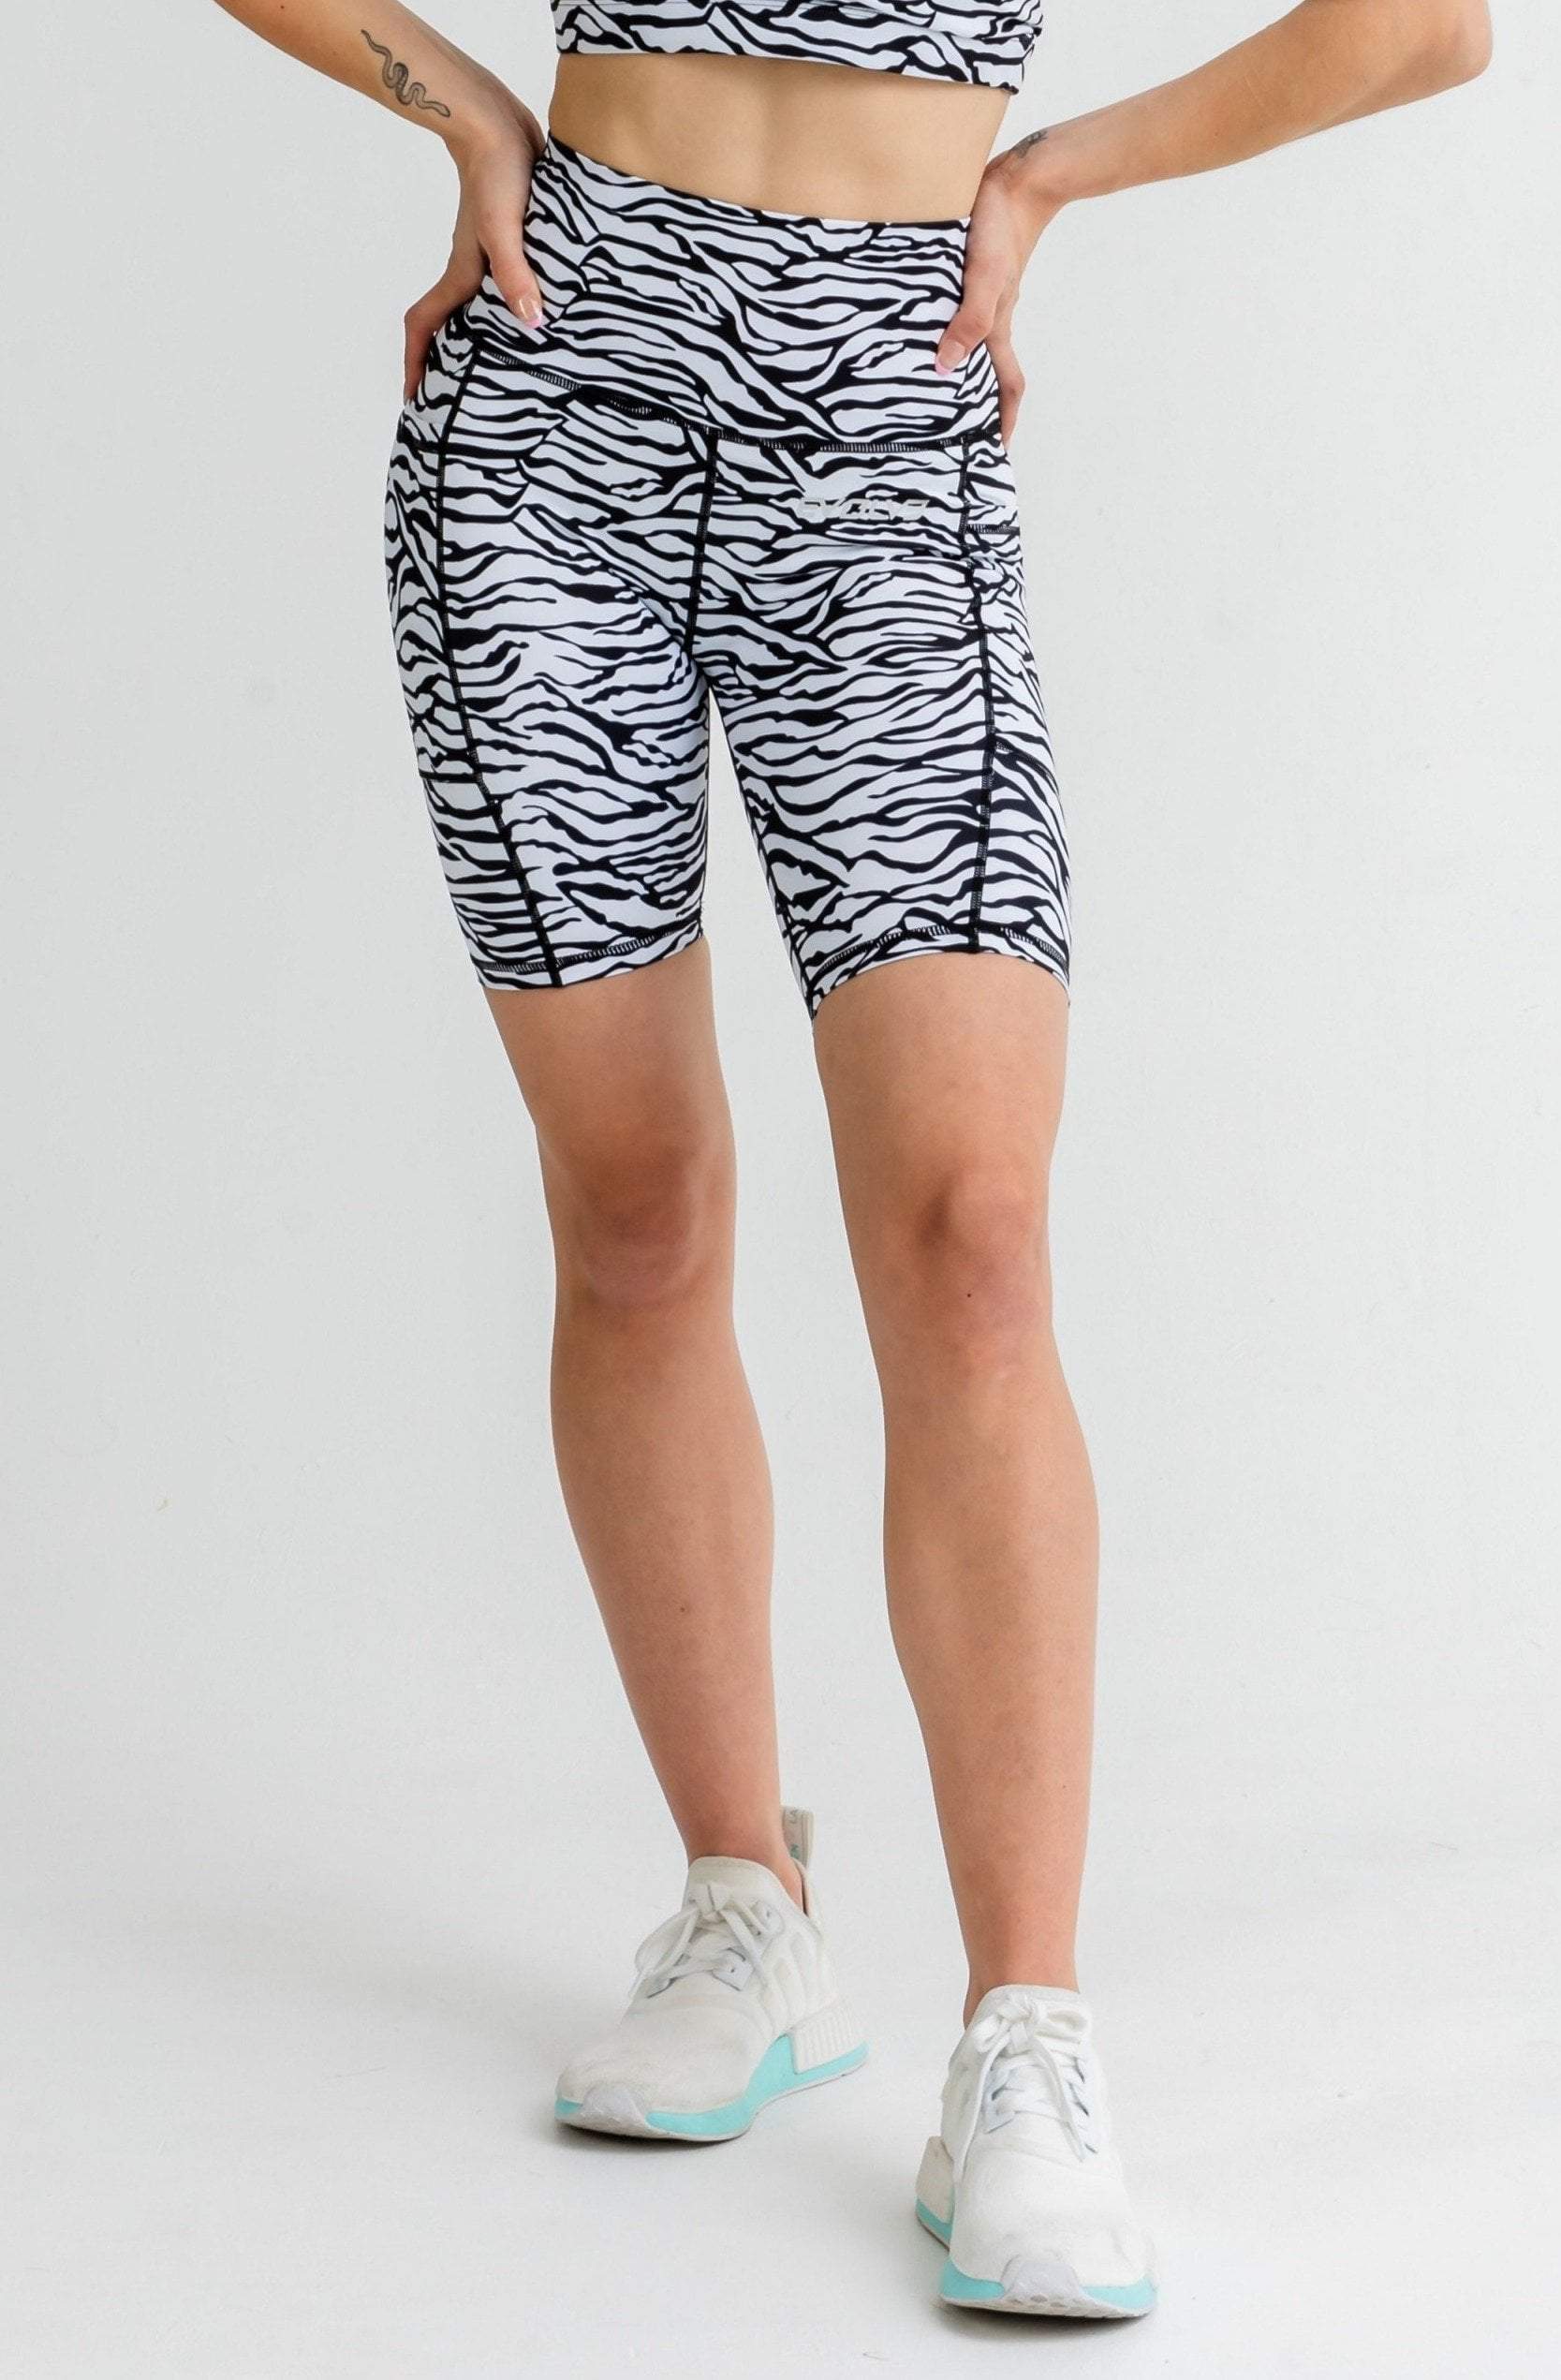 Evolve Apparel Jungle Bike Shorts - Zebra